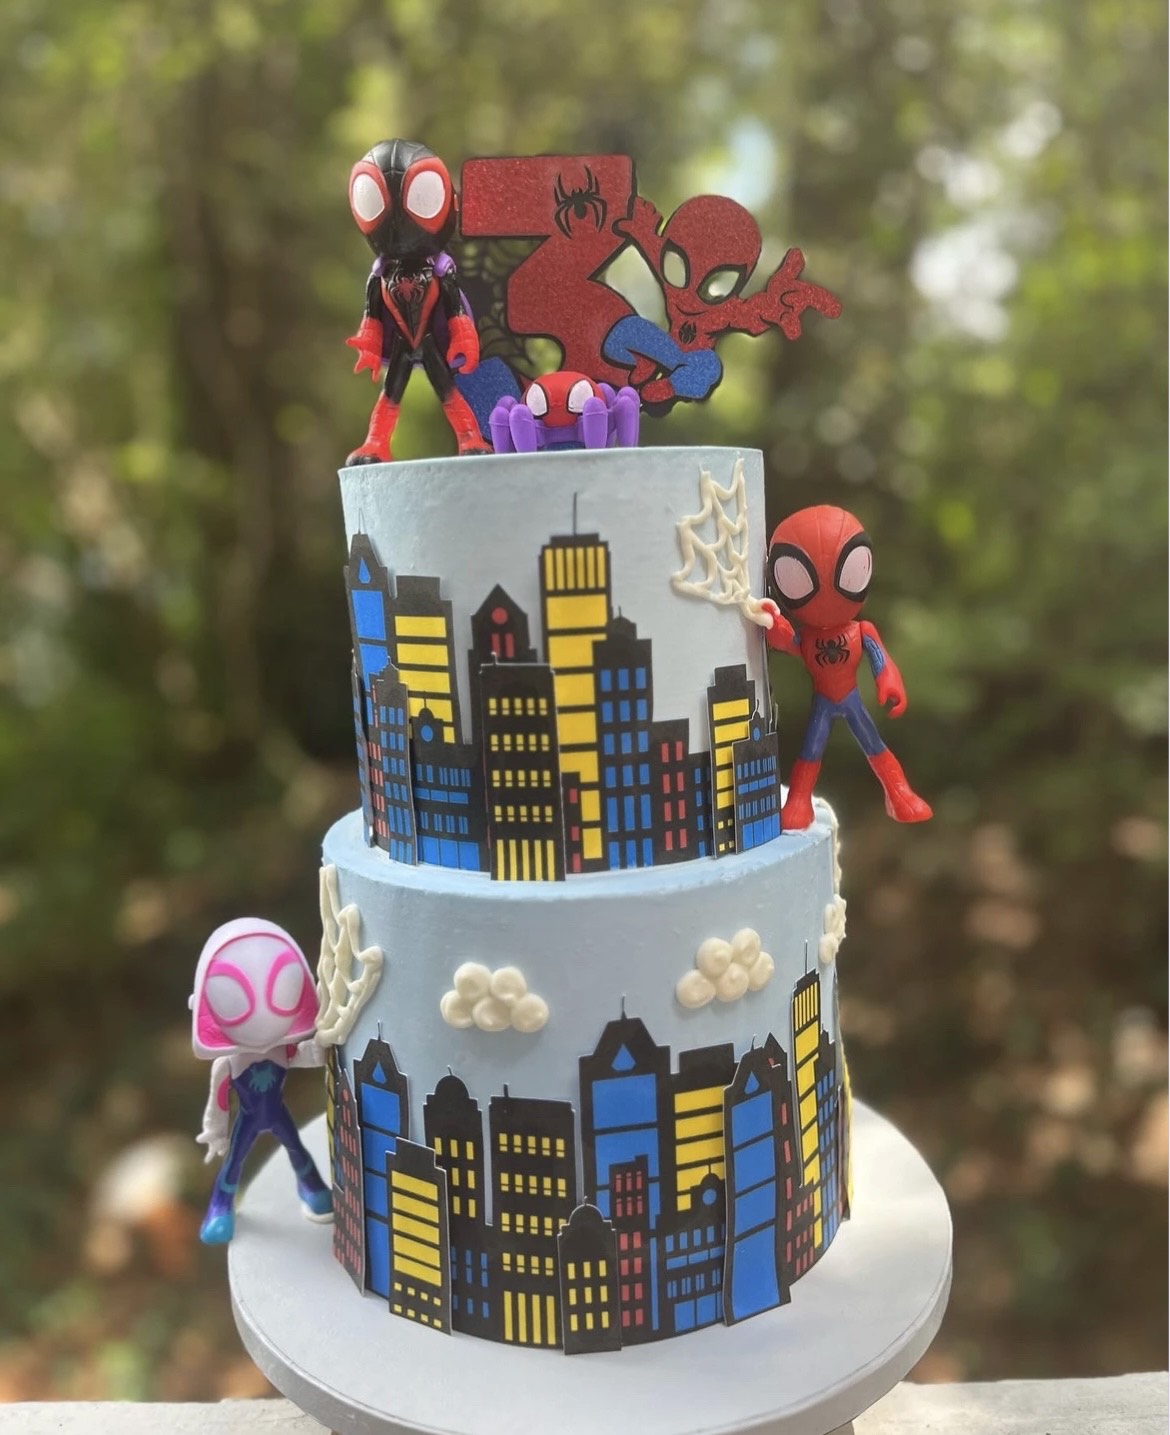 The Best Birthday Cakes in Atlanta